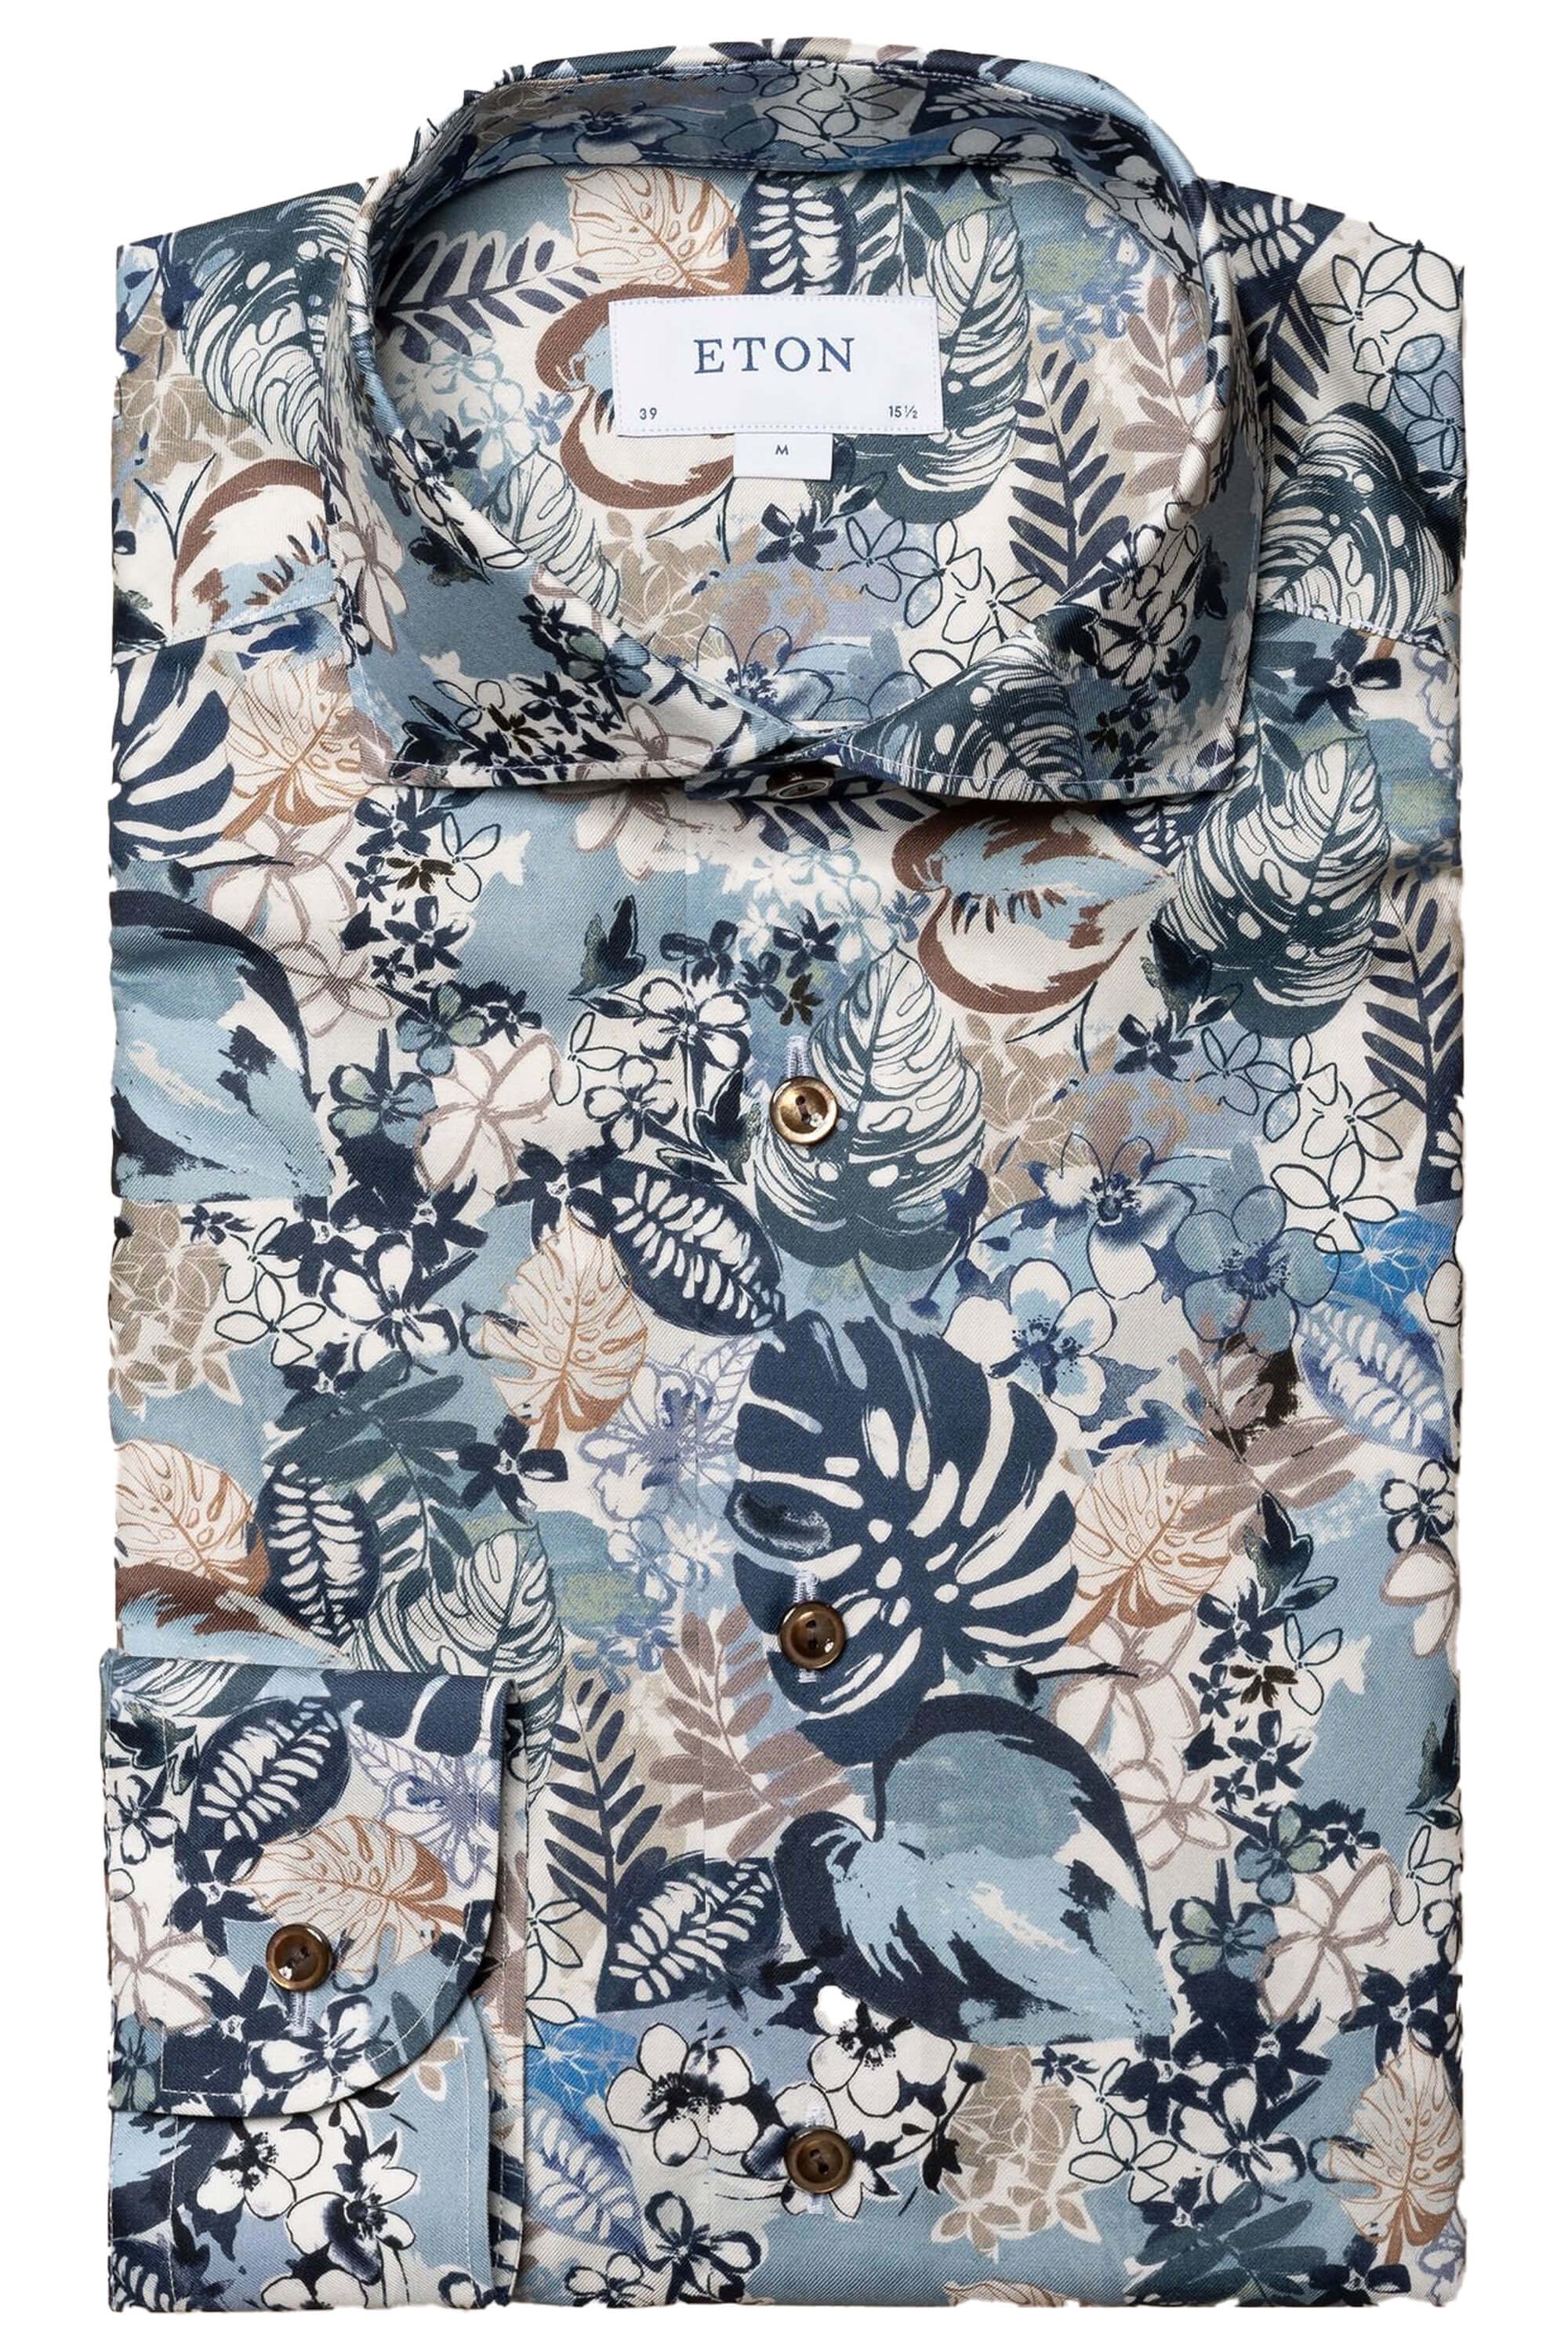 Eton Shirts Mens Light Blue/White Floral Print Shirt